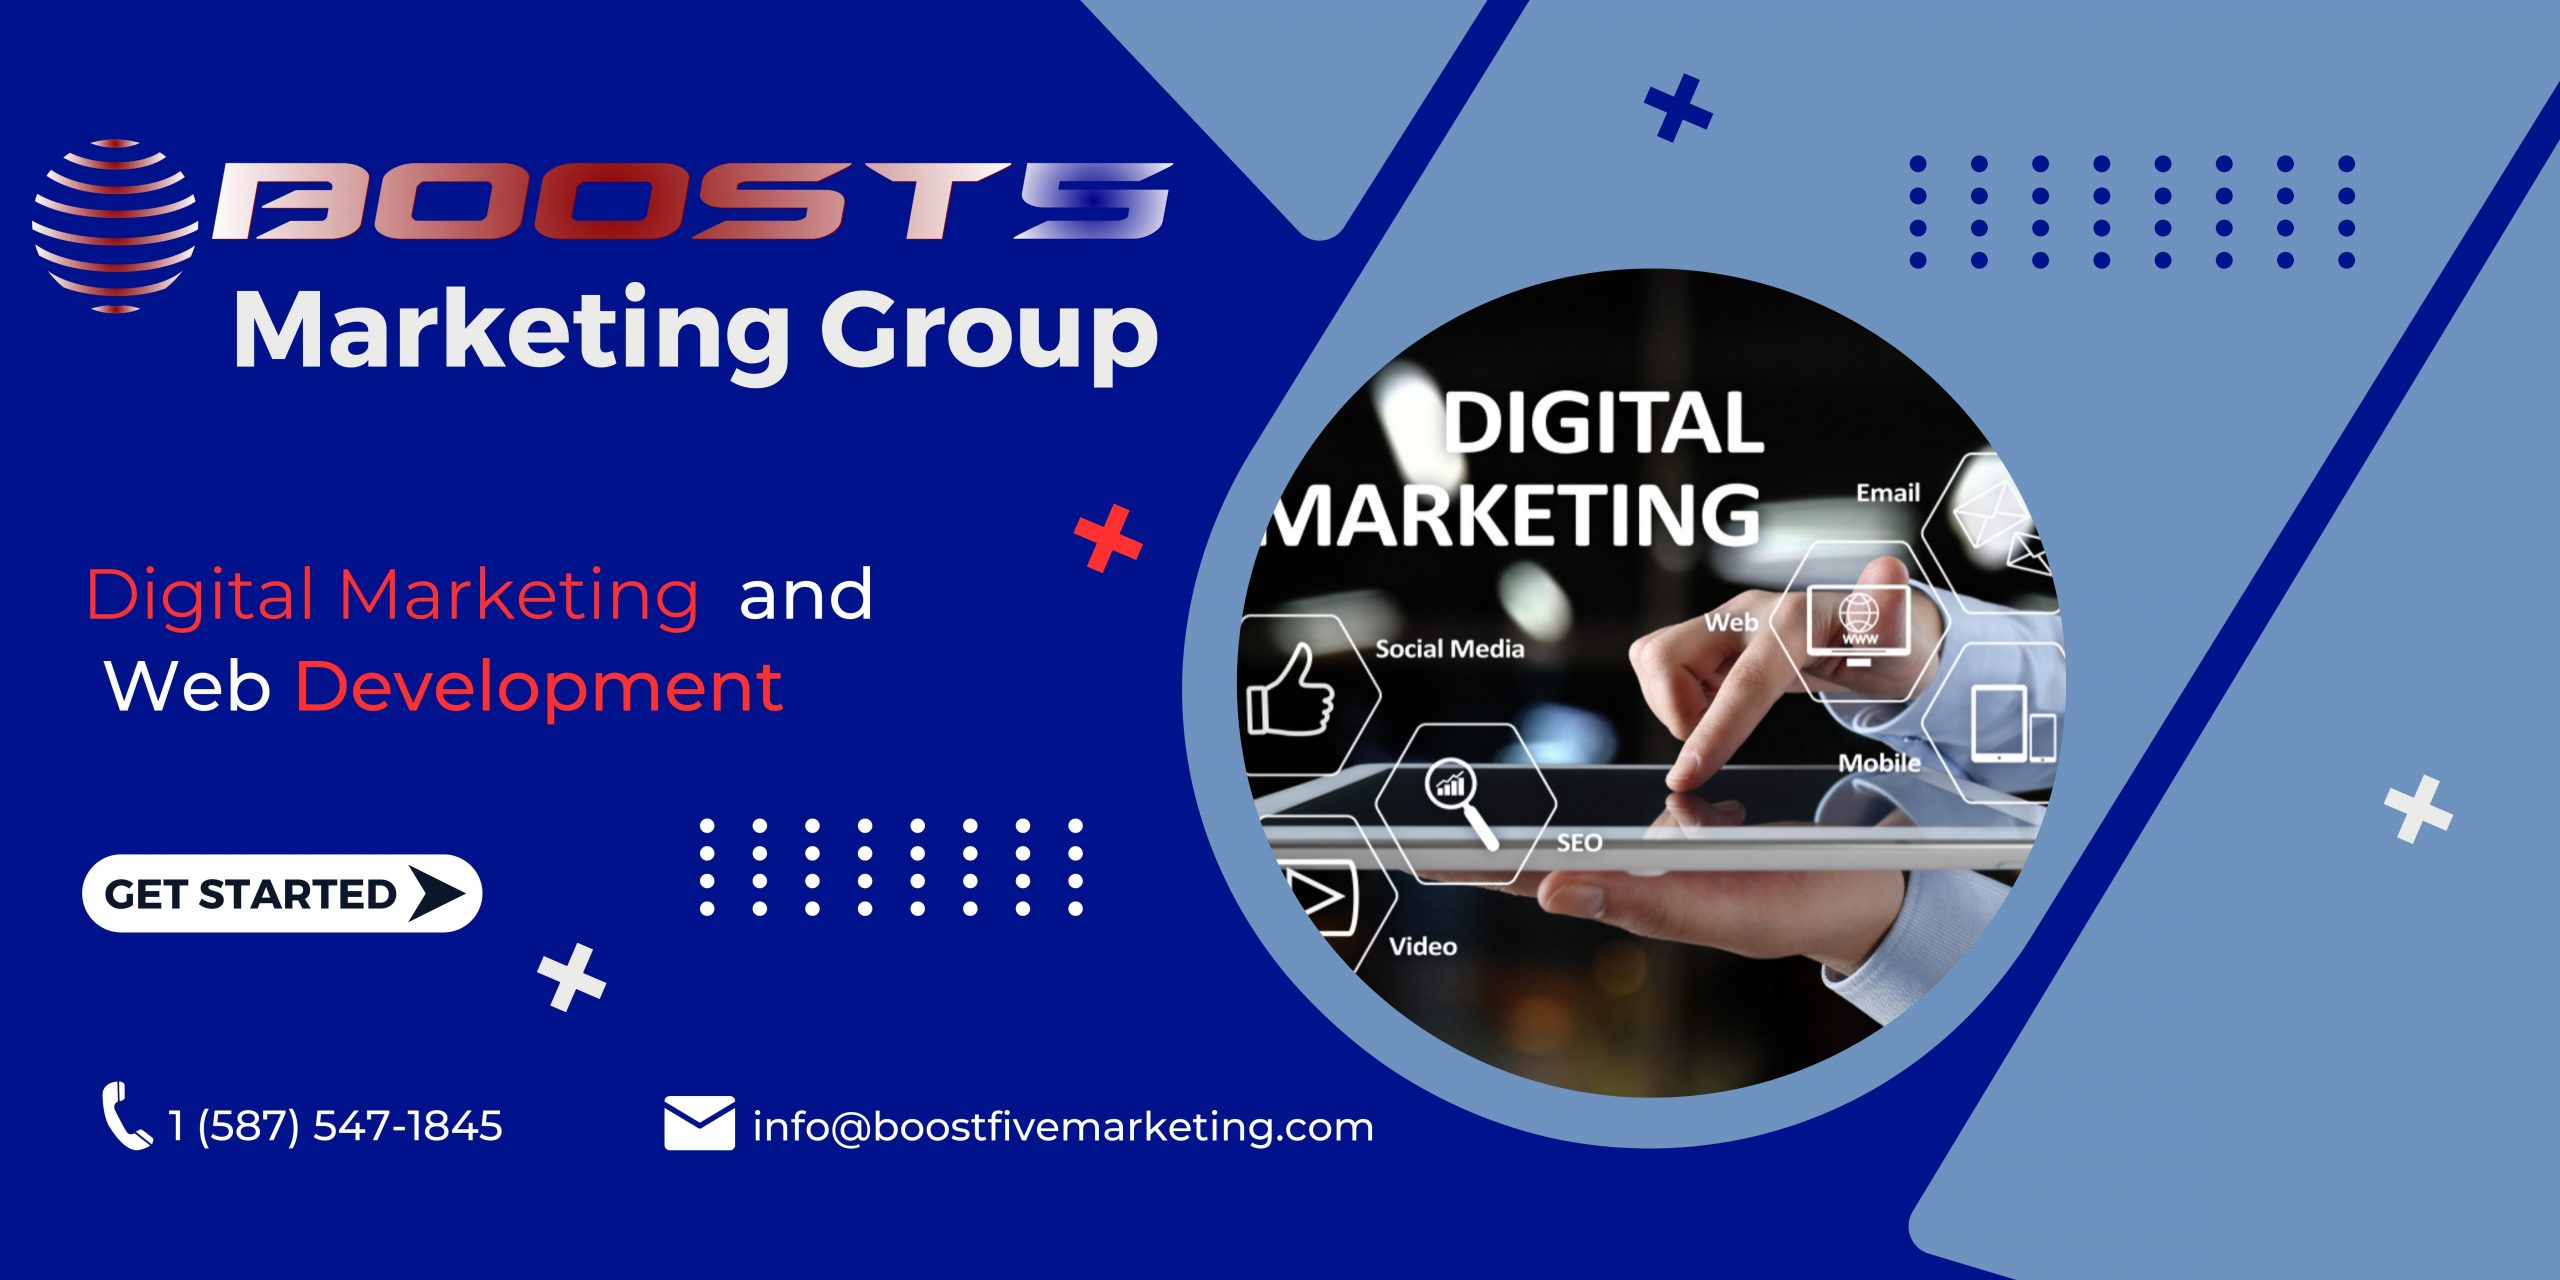 Digital Marketing Agency and Web Development by BOOST5 Marketing